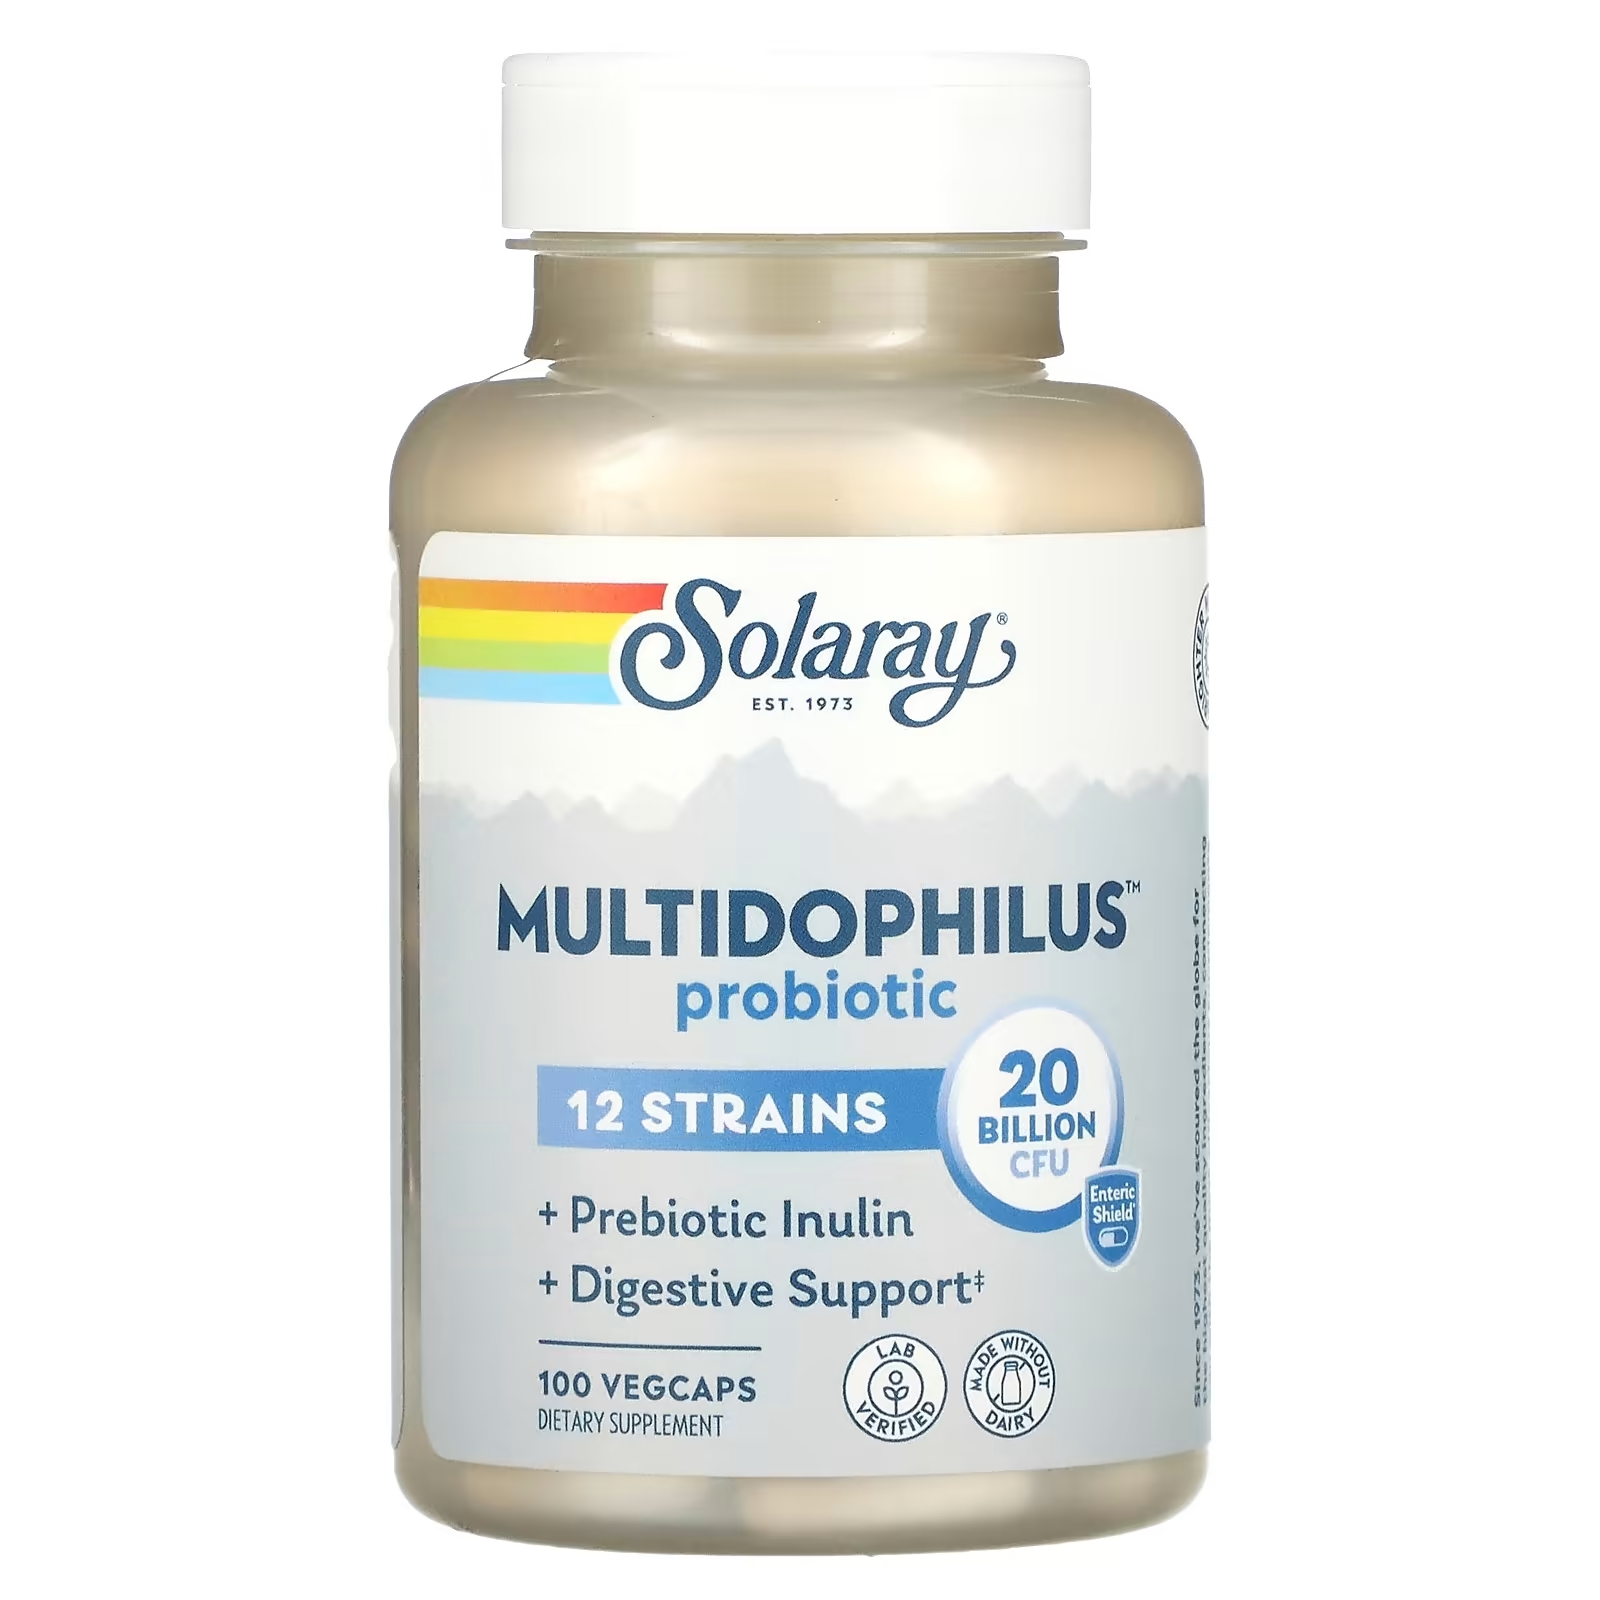 Solaray Multidophilus Probiotic пробиотик 20 млрд КОЕ, 100 вегетарианских капсул VegCaps